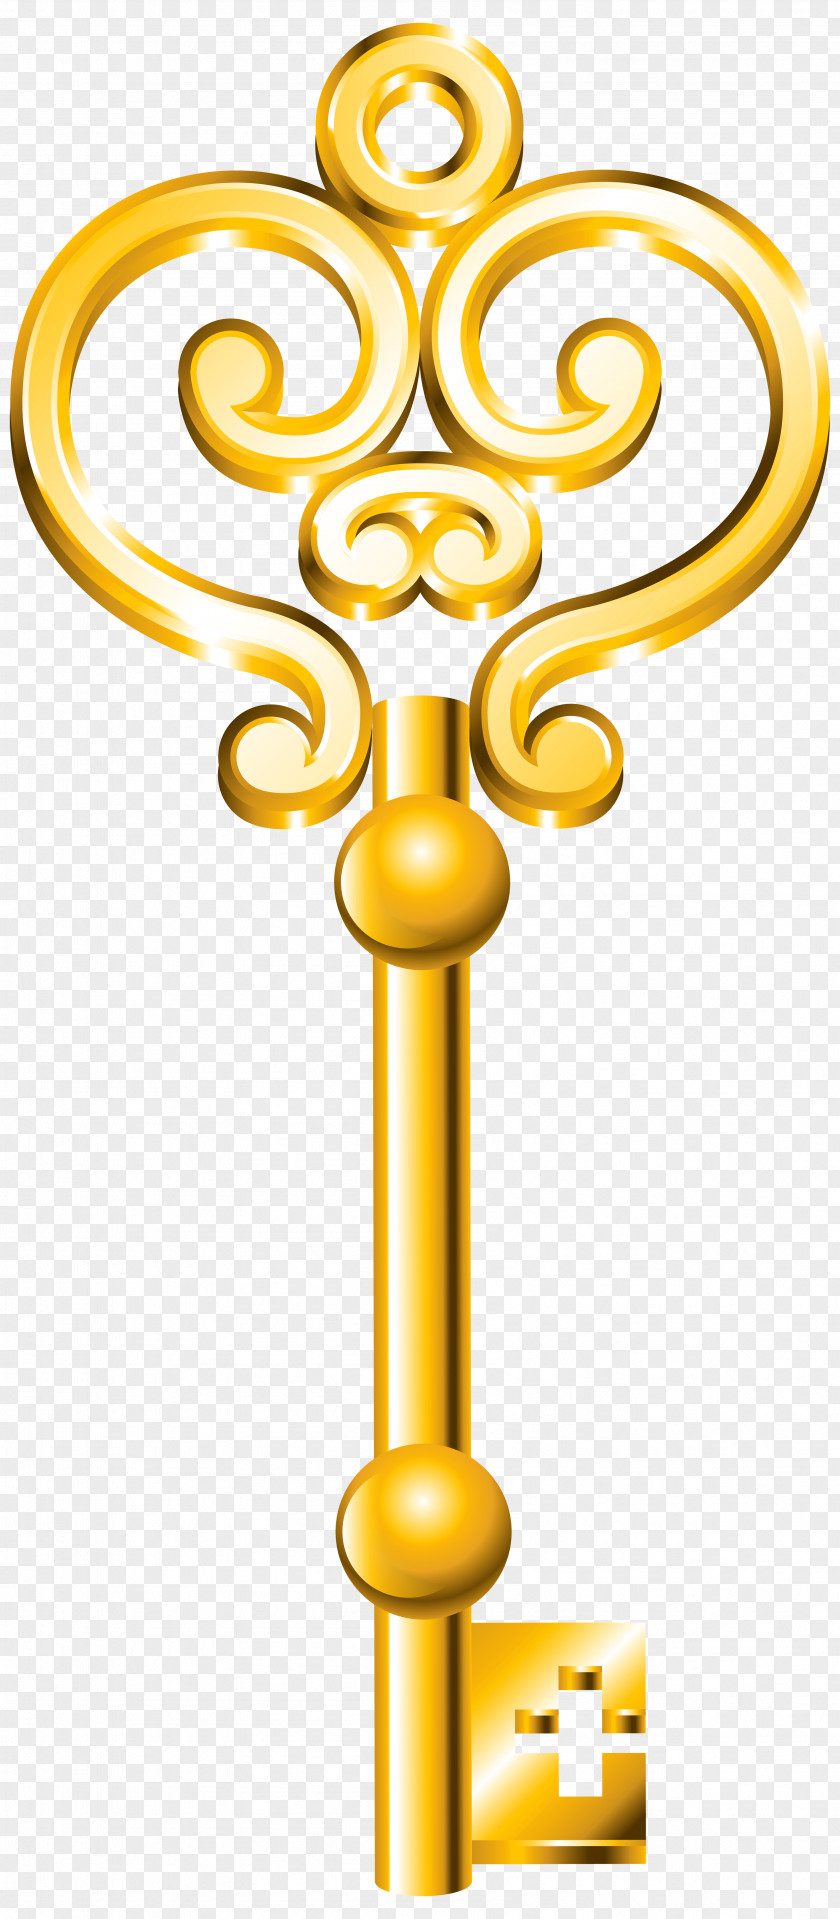 Key Chains Clip Art PNG